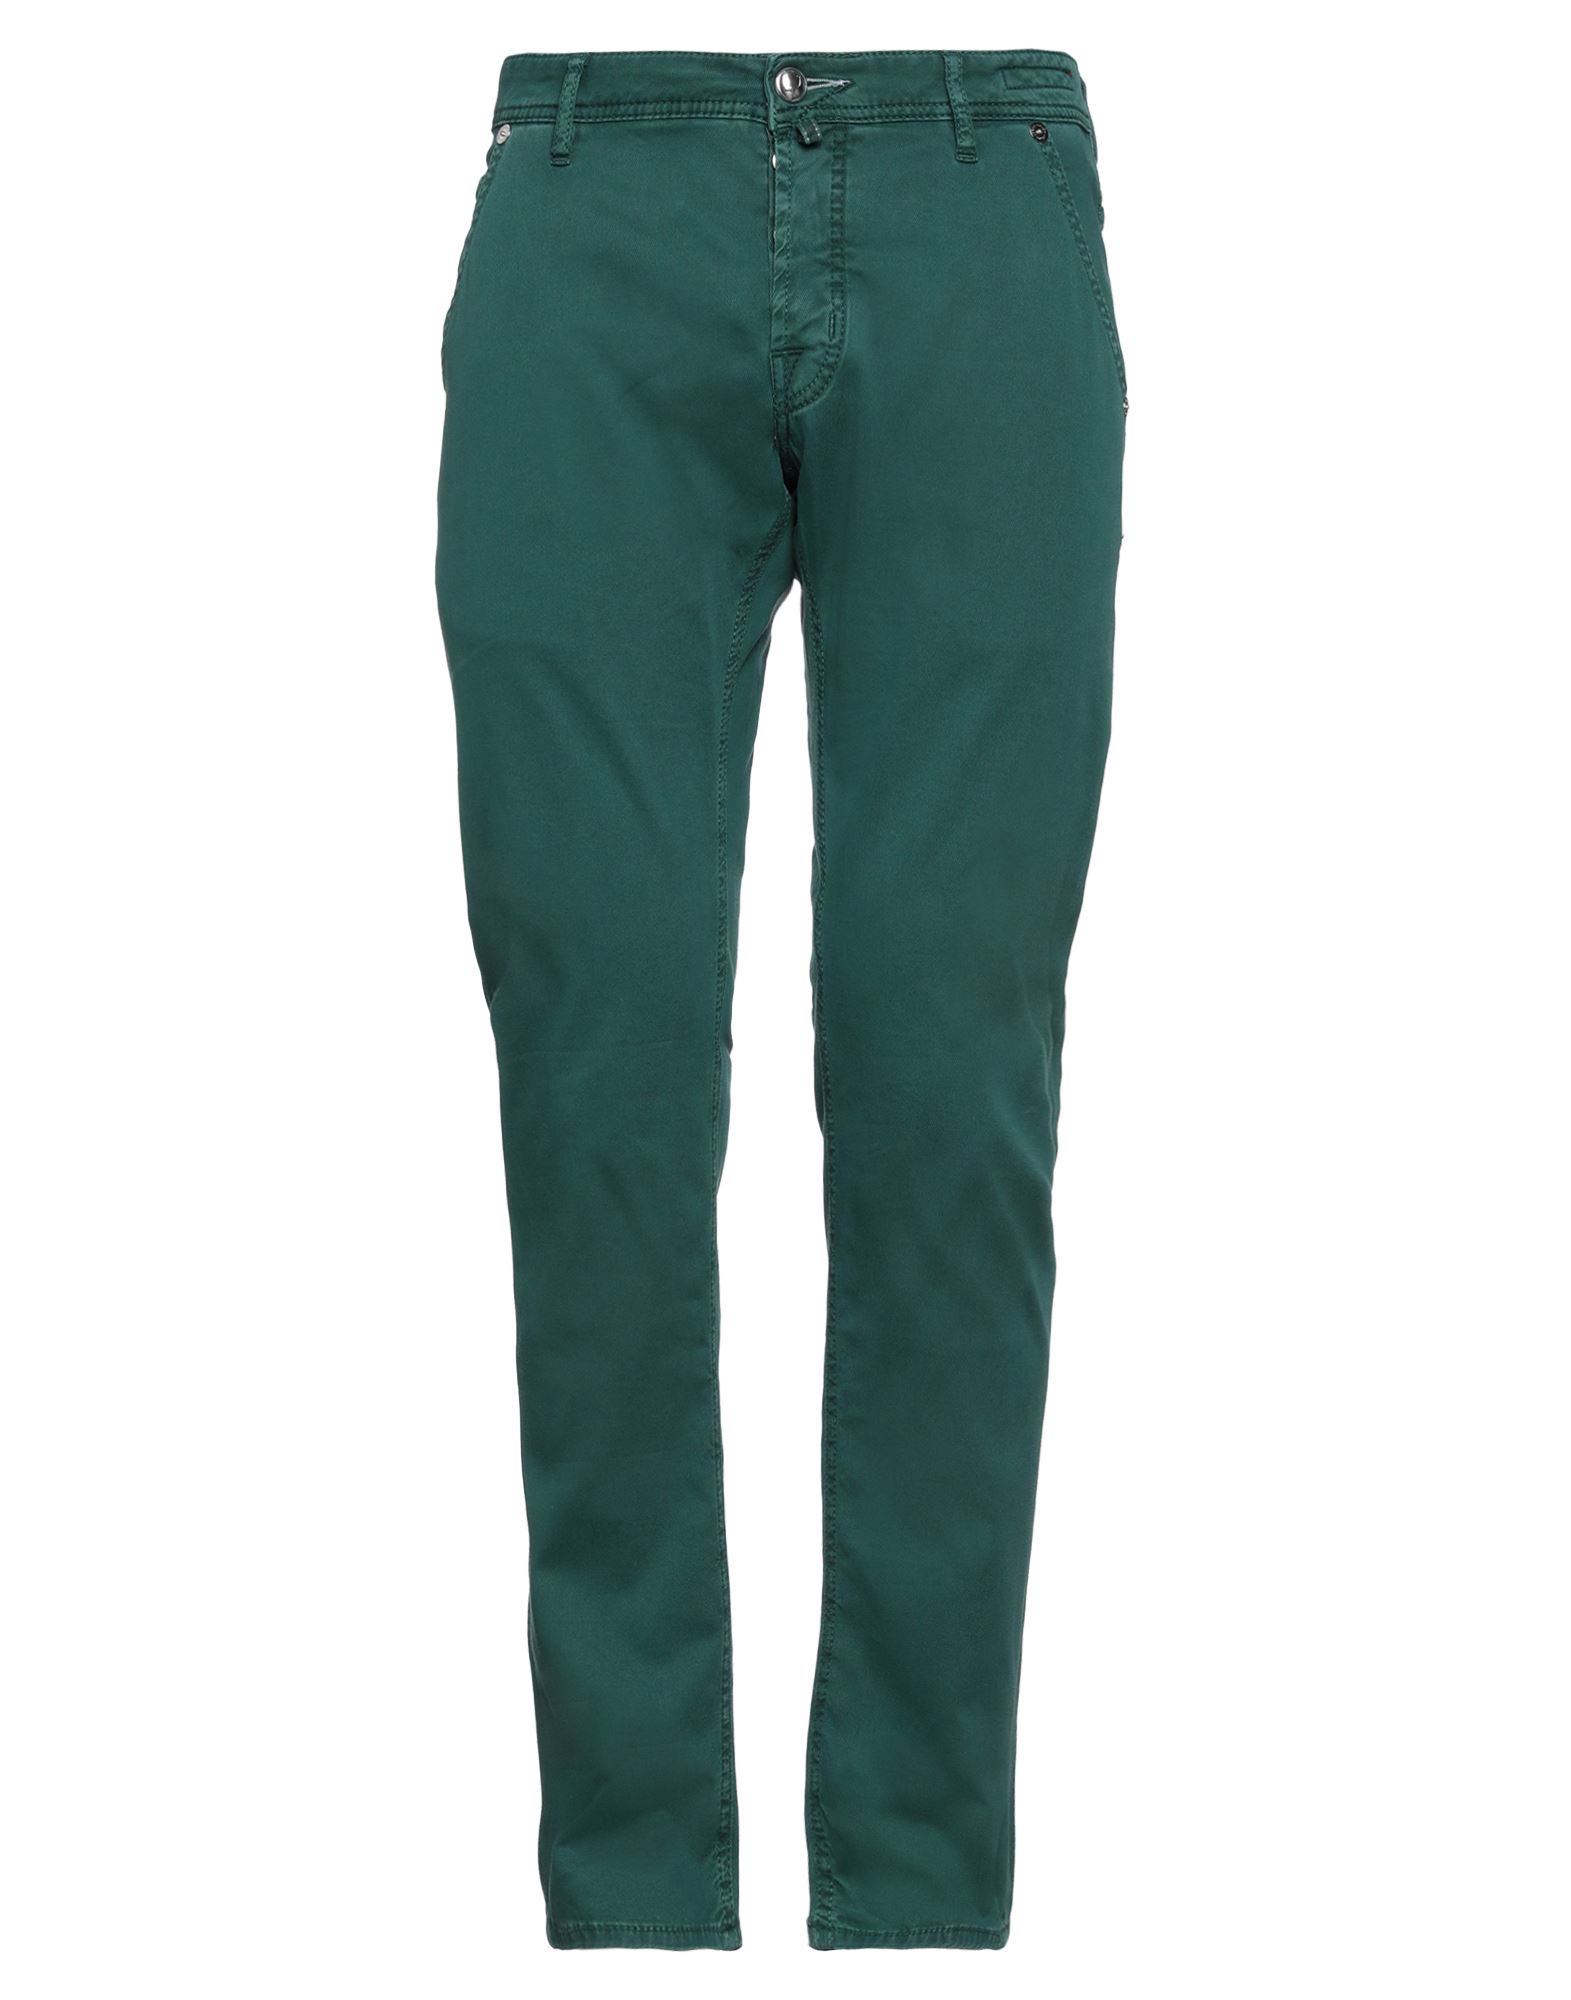 Jacob Cohёn Pants In Emerald Green